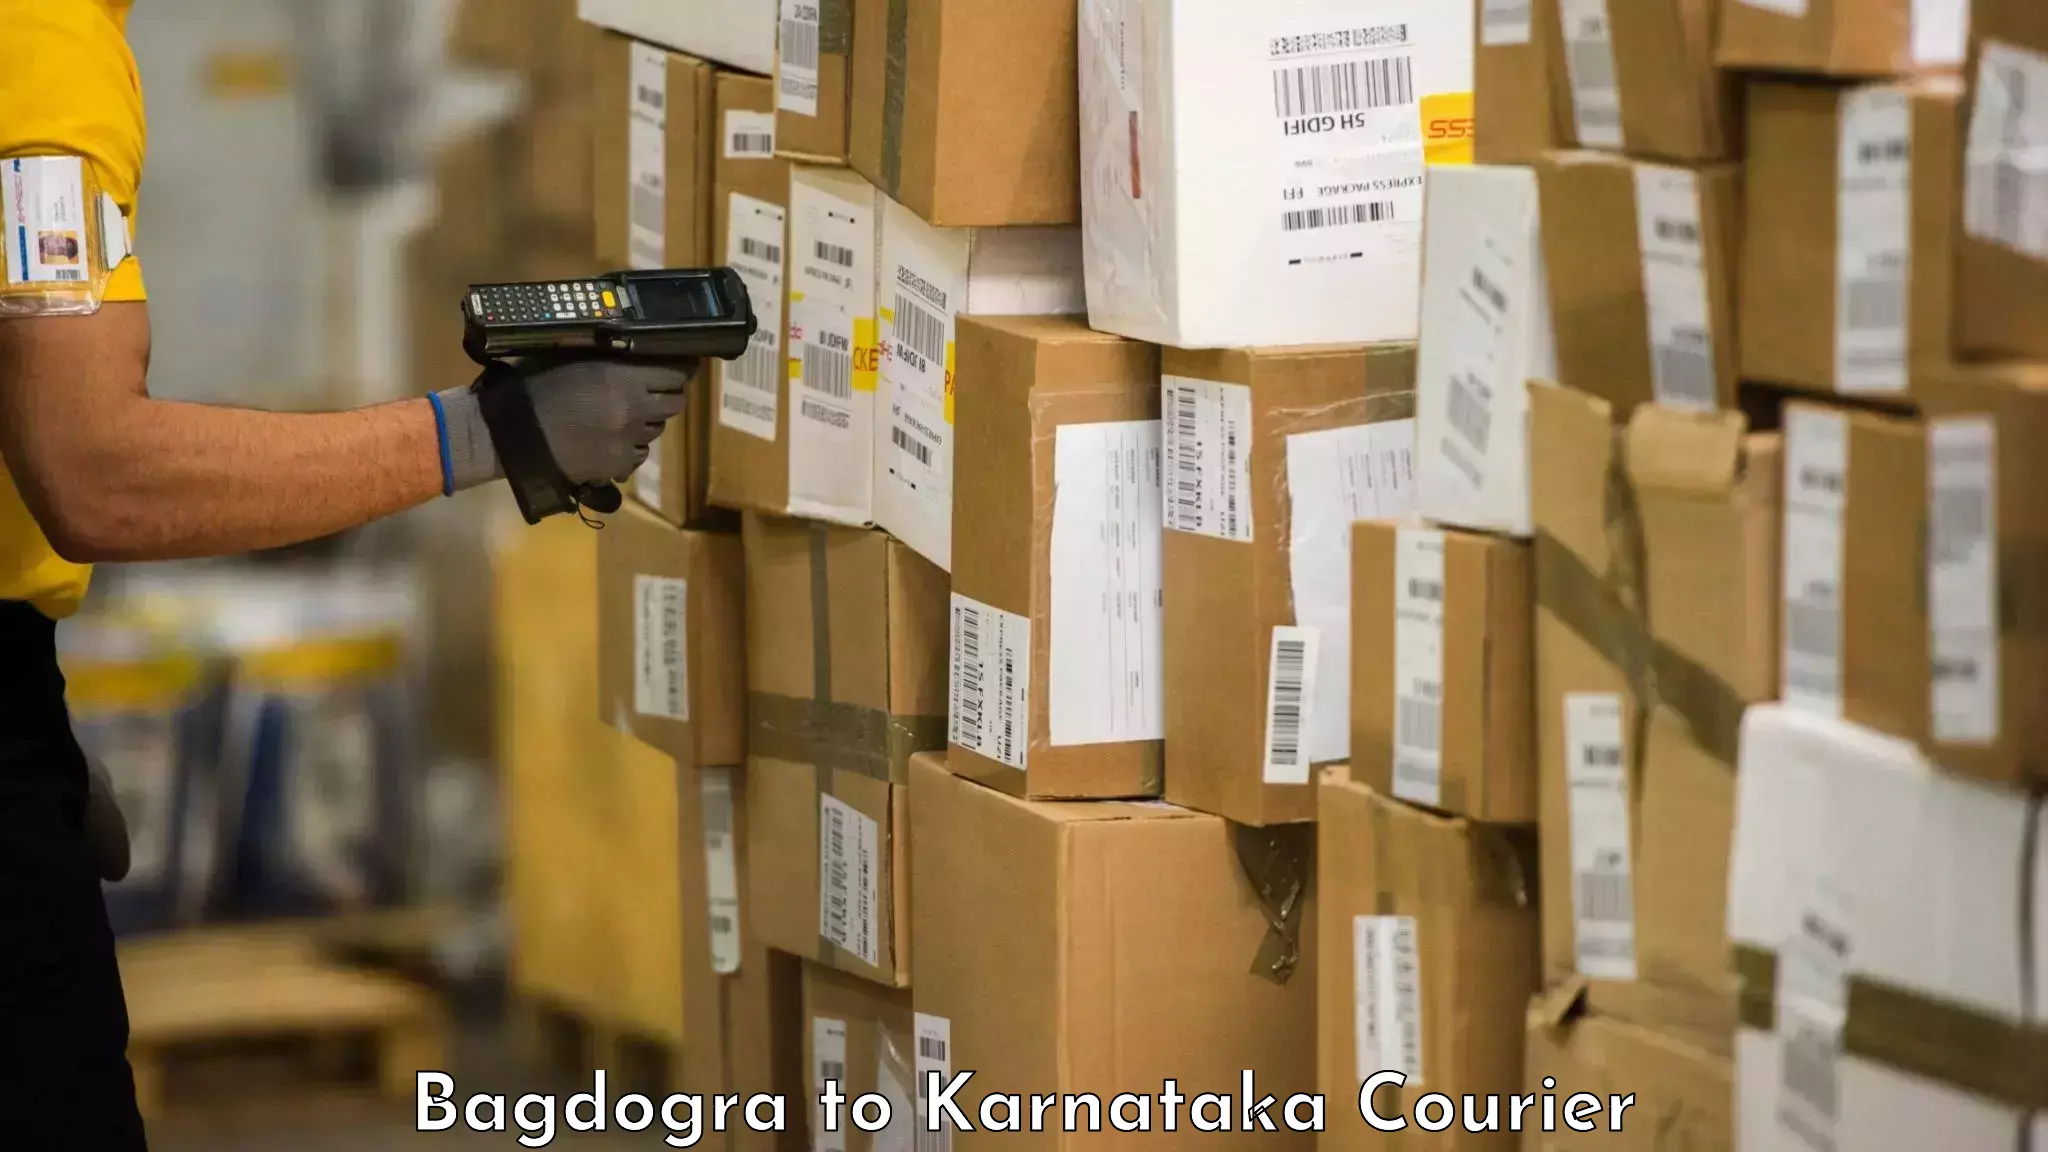 Baggage shipping experts Bagdogra to Karnataka